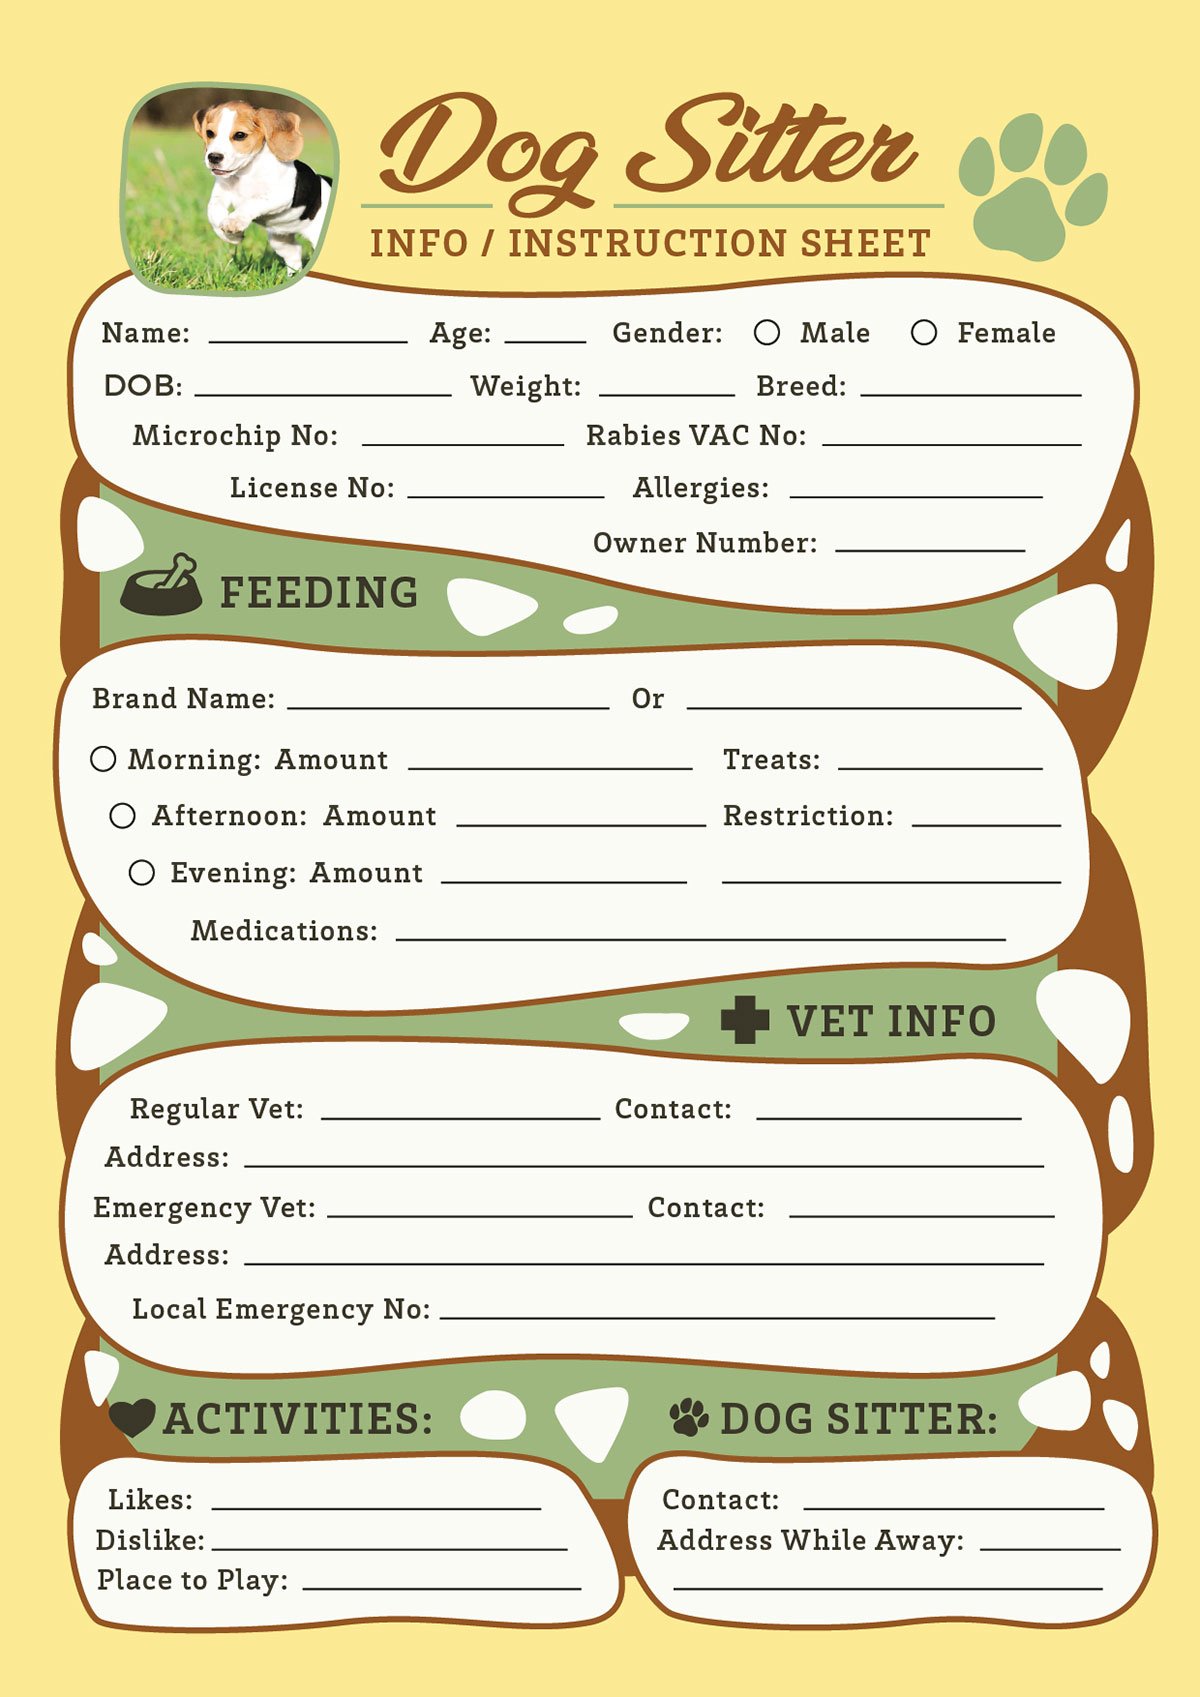 free-dog-sitter-instruction-information-sheet-design-template